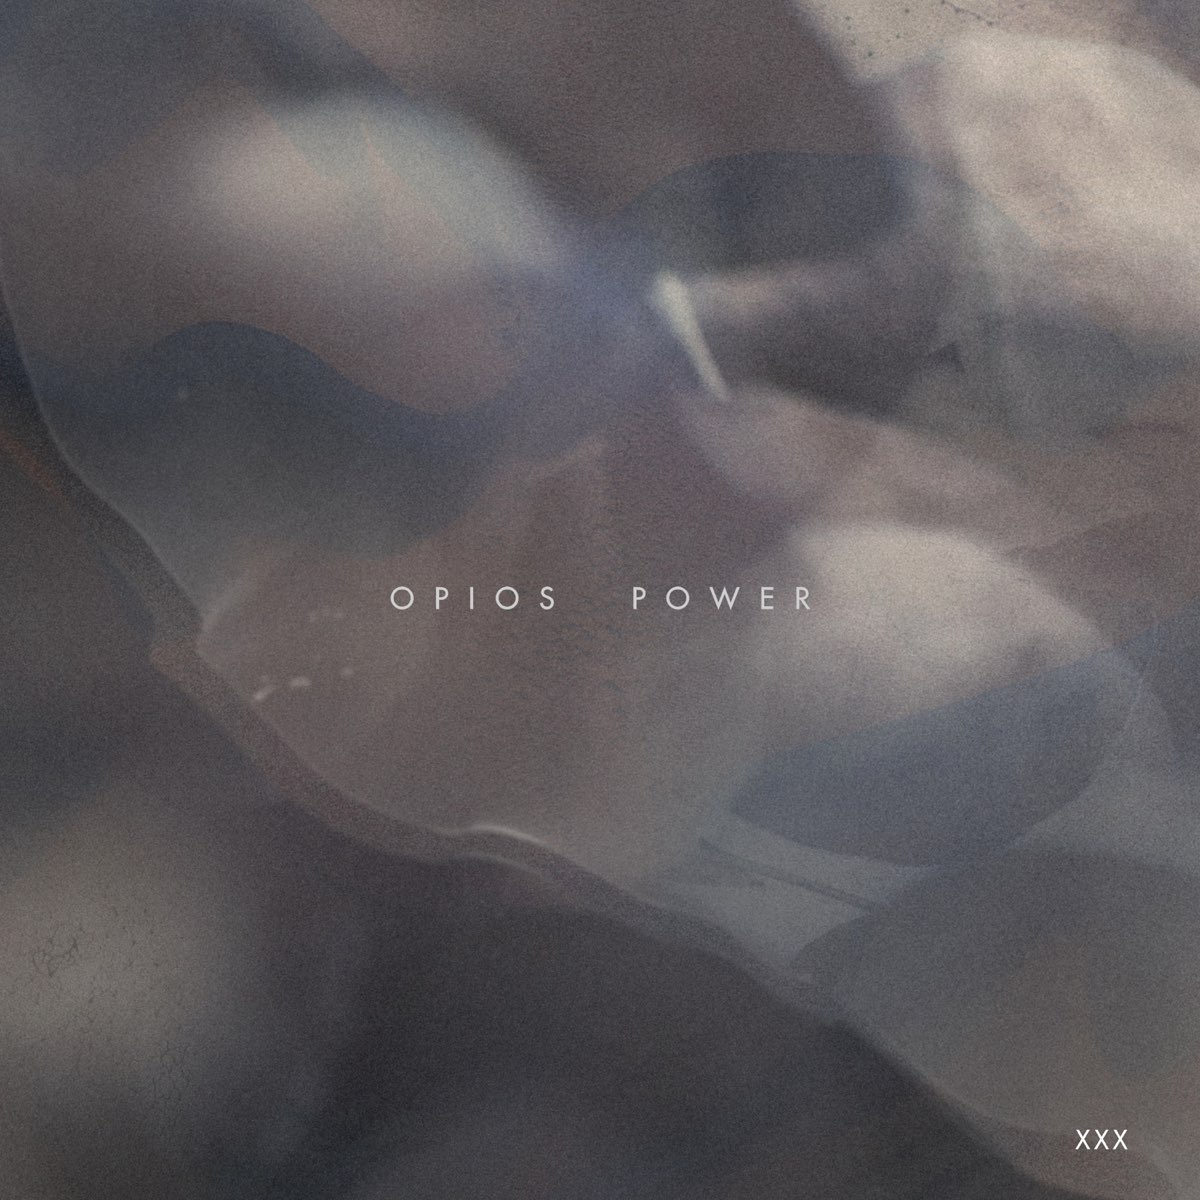 ‎Opios Power - Single by Javier Orduna on Apple Music